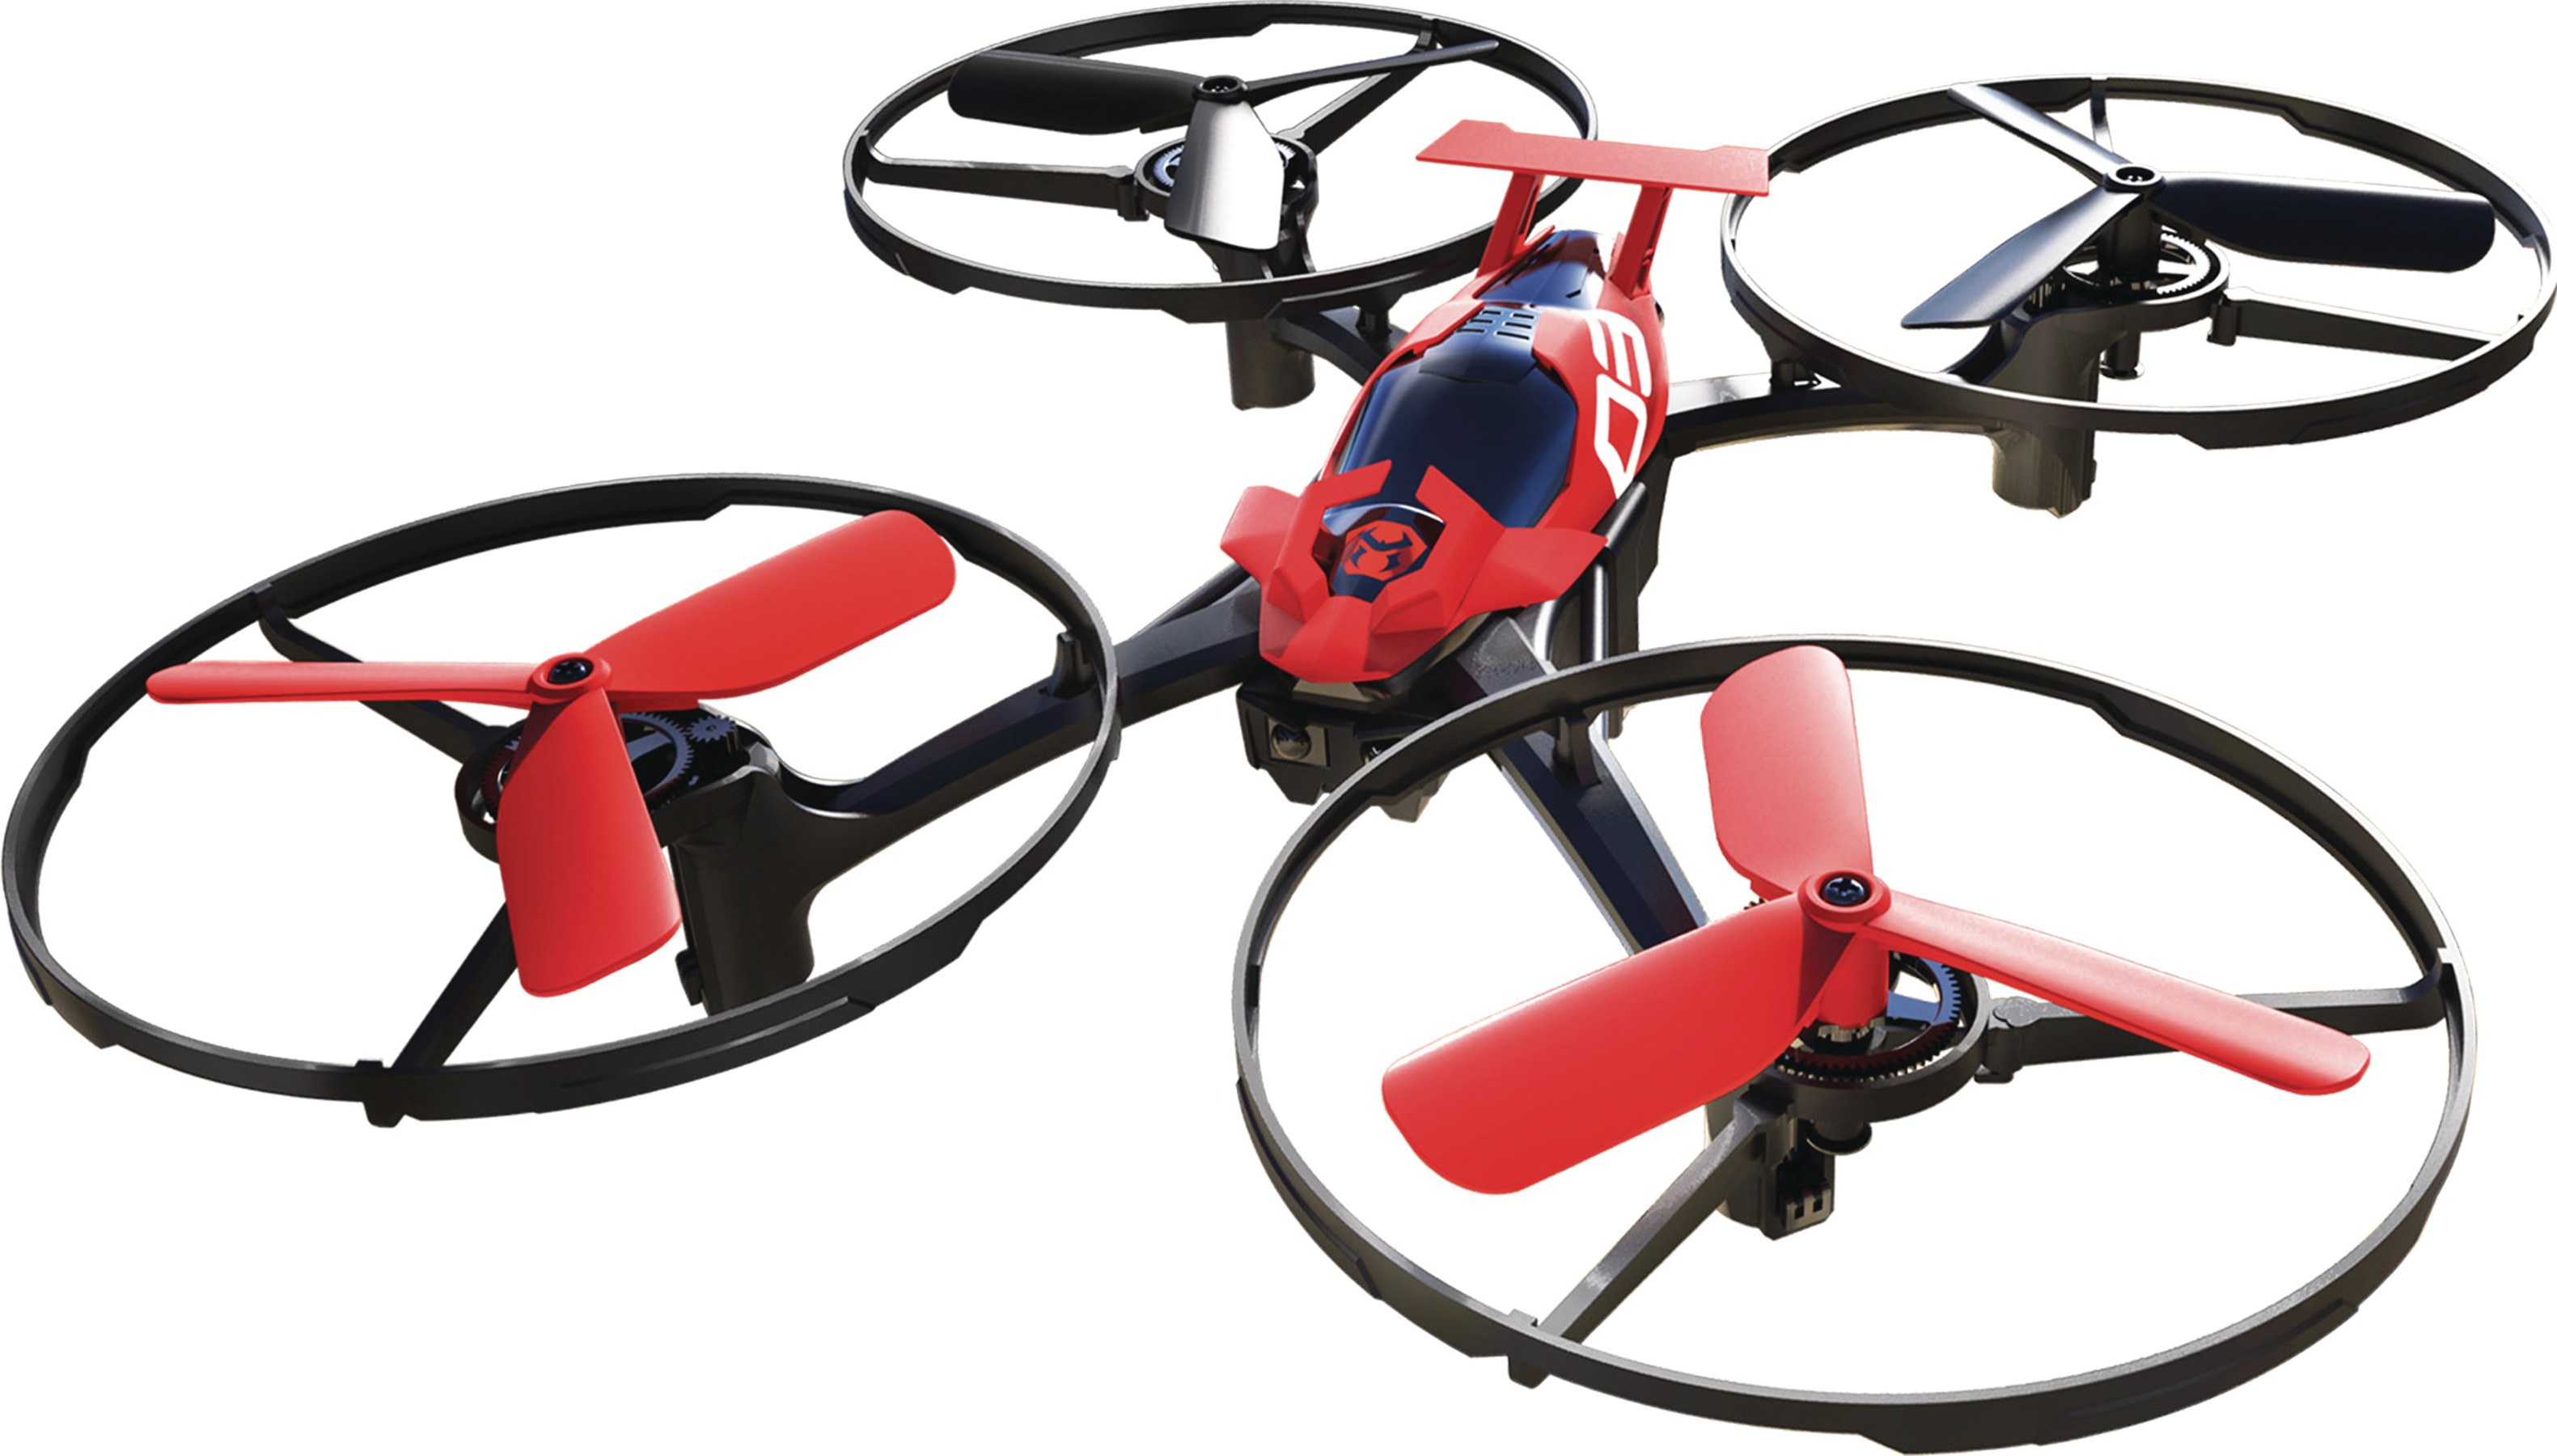 Sky Viper Hover Racer Game Enhanced Battle&Racing Drone Motor White/Black Wires 